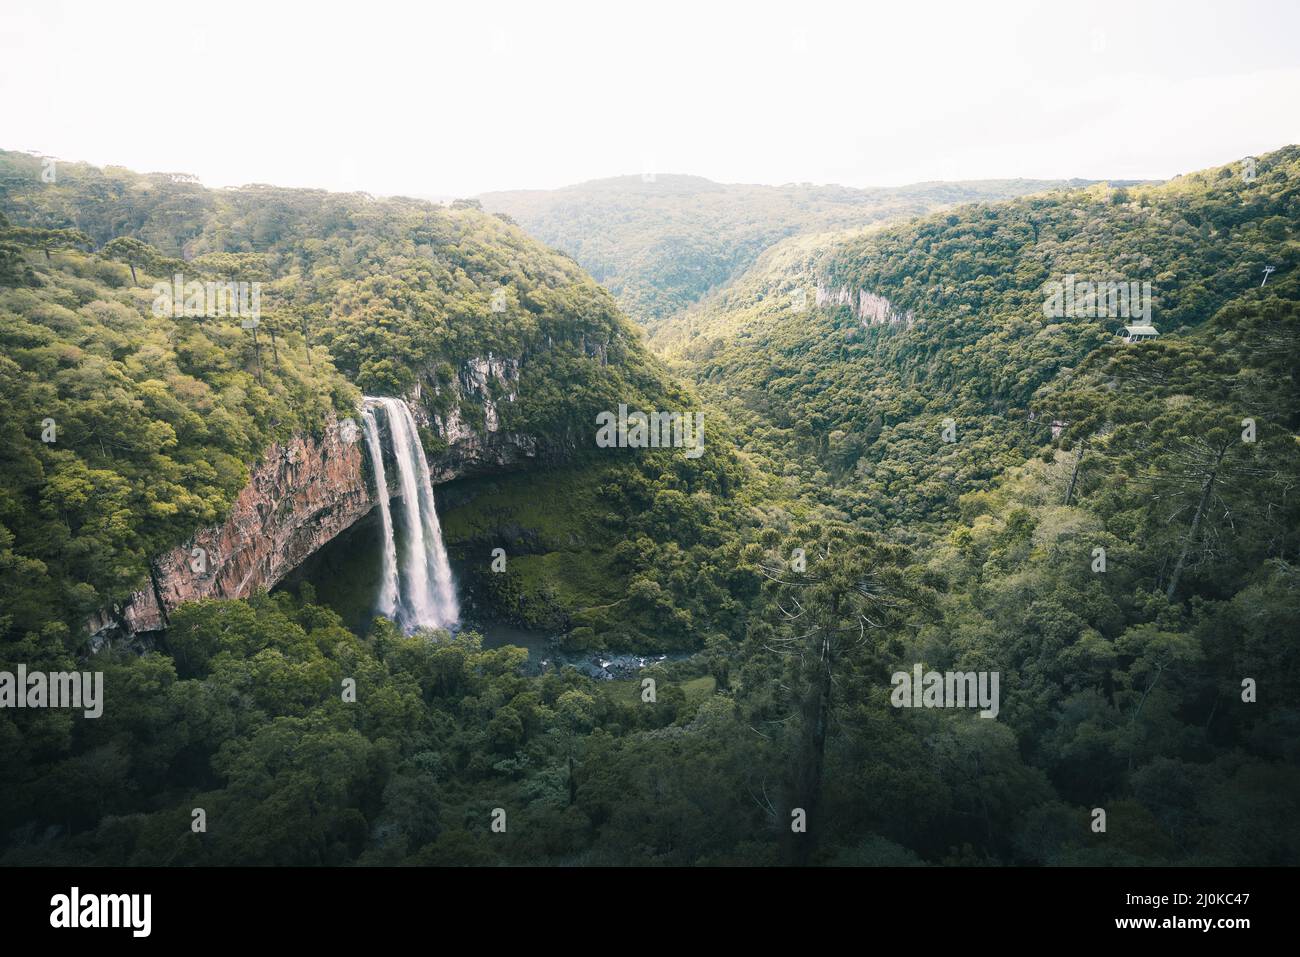 Cascade de Caracol (Cascata do Caracol) - Canela, Rio Grande do Sul, Brésil Banque D'Images